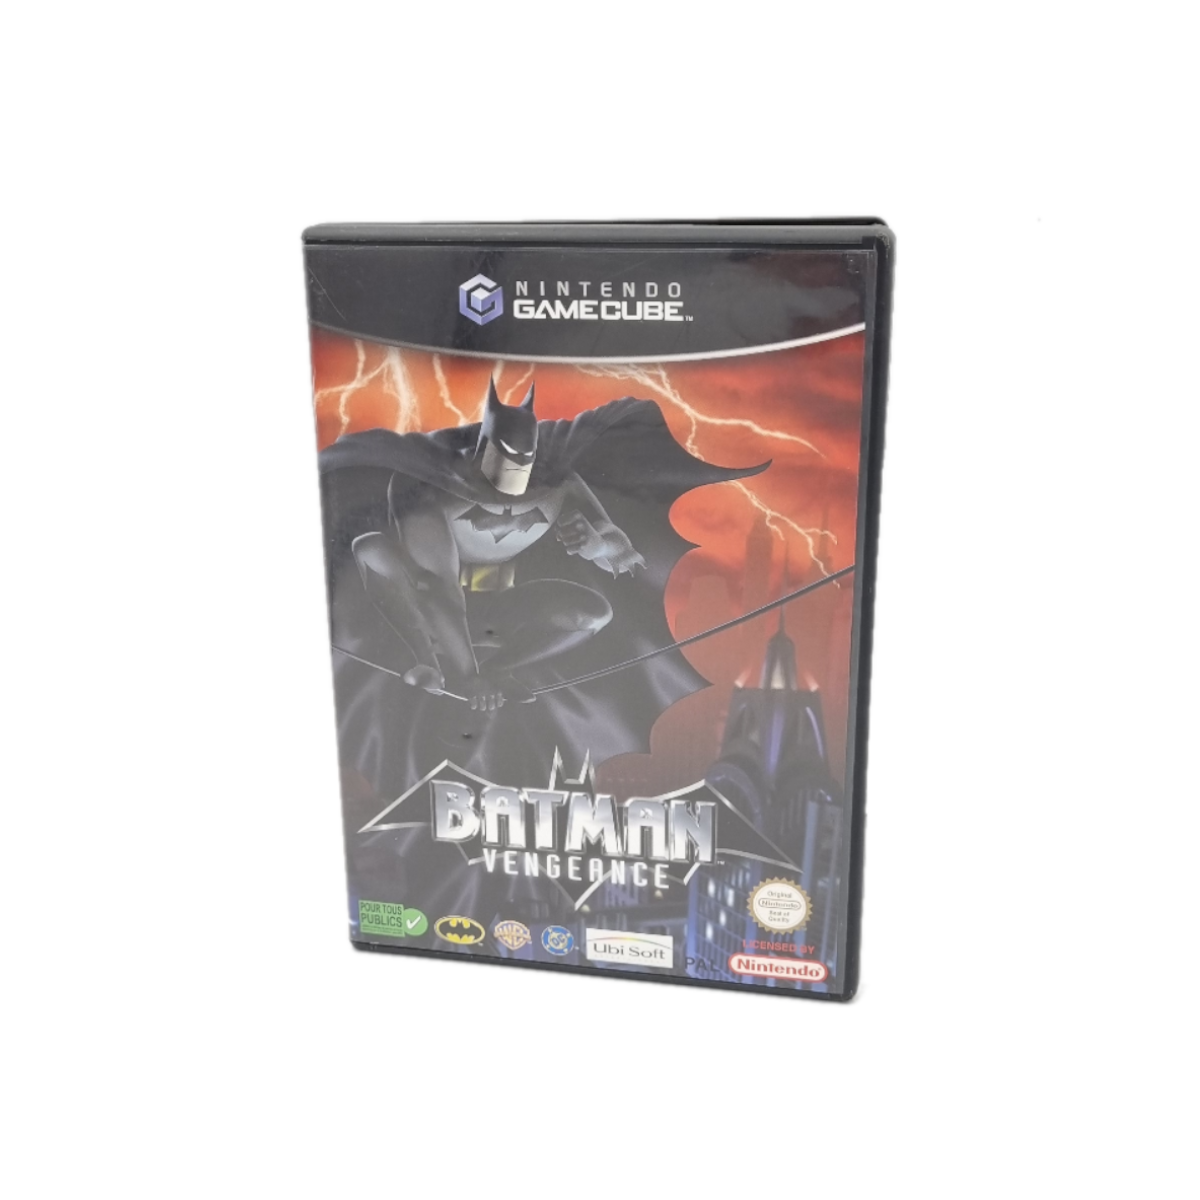 Batman Vengence GameCube - front